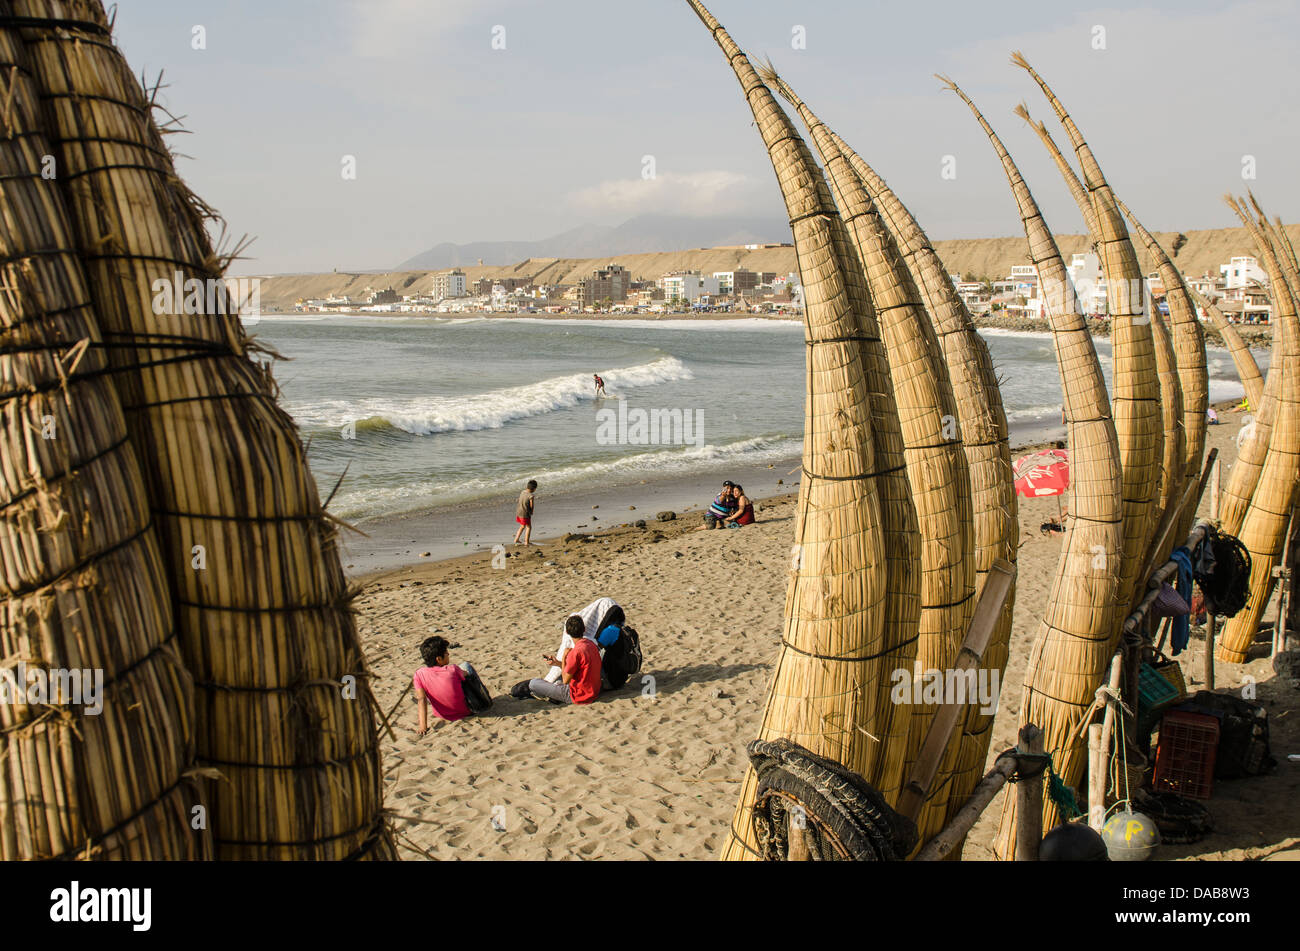 Caballitos de Totora oder Schilf Boote Kanus am Strand Malecon in Huanchaco Peru. Stockfoto